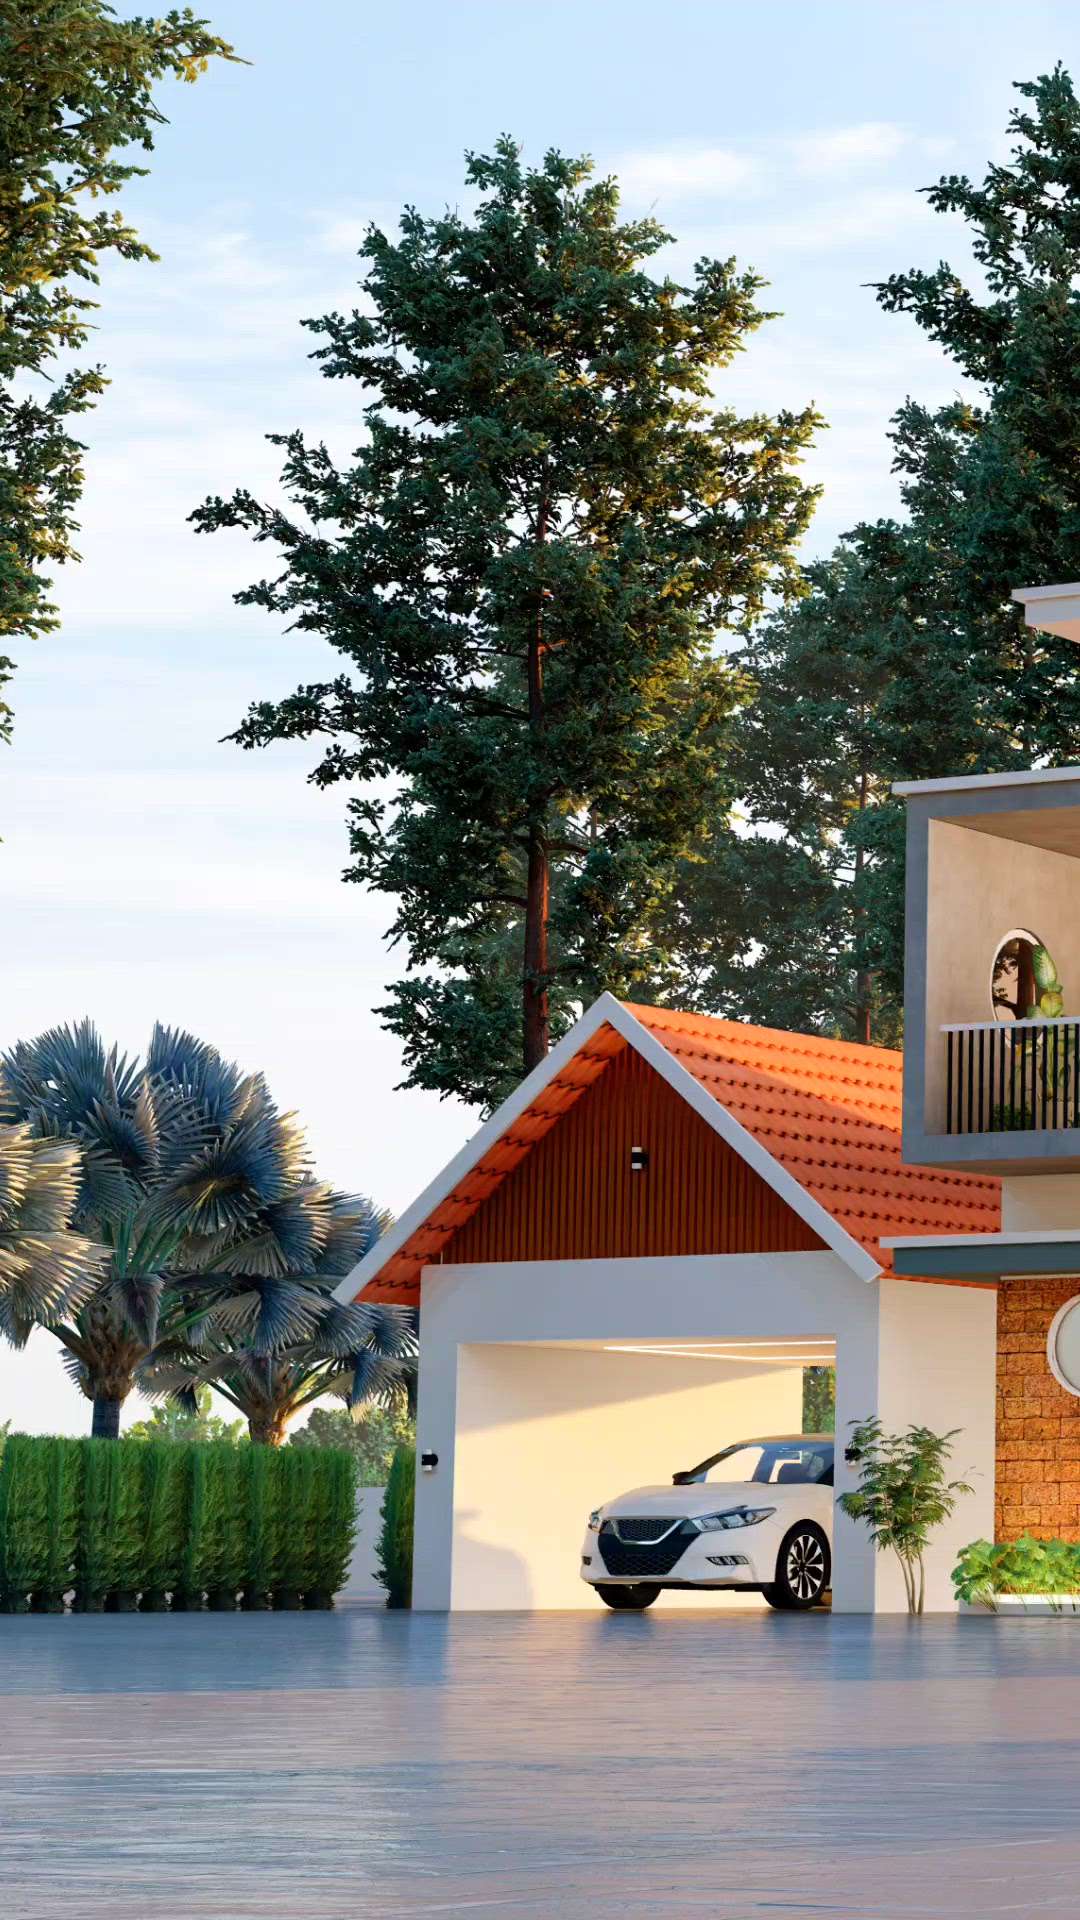 Kerala home
#KeralaStyleHouse #keralastyle #ElevationHome